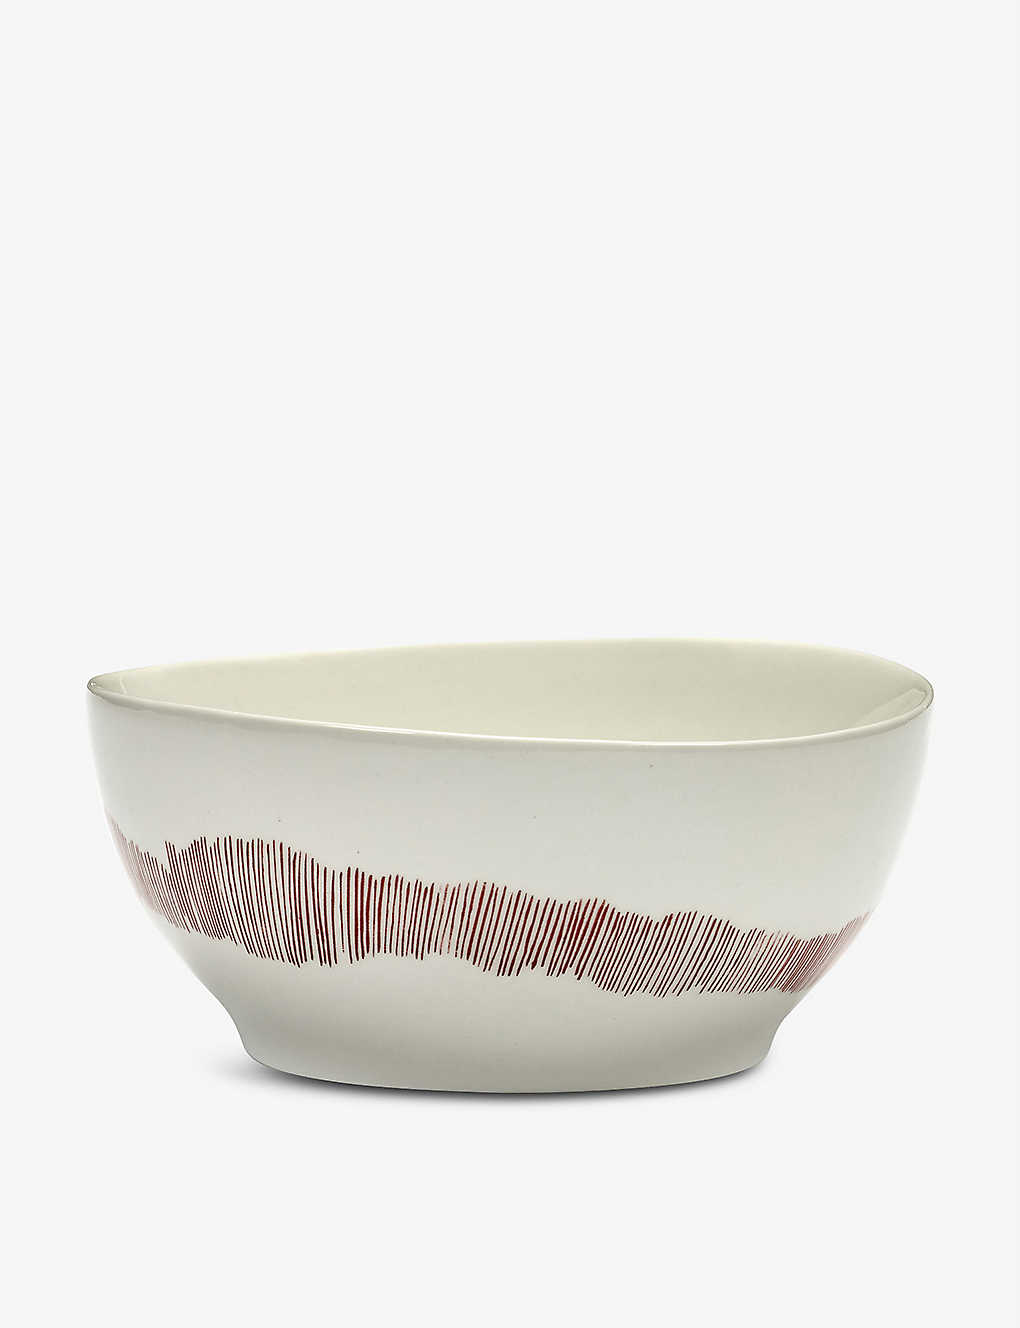 Serax Yotam Ottolenghi Feast Striped Stoneware Bowl 16cm